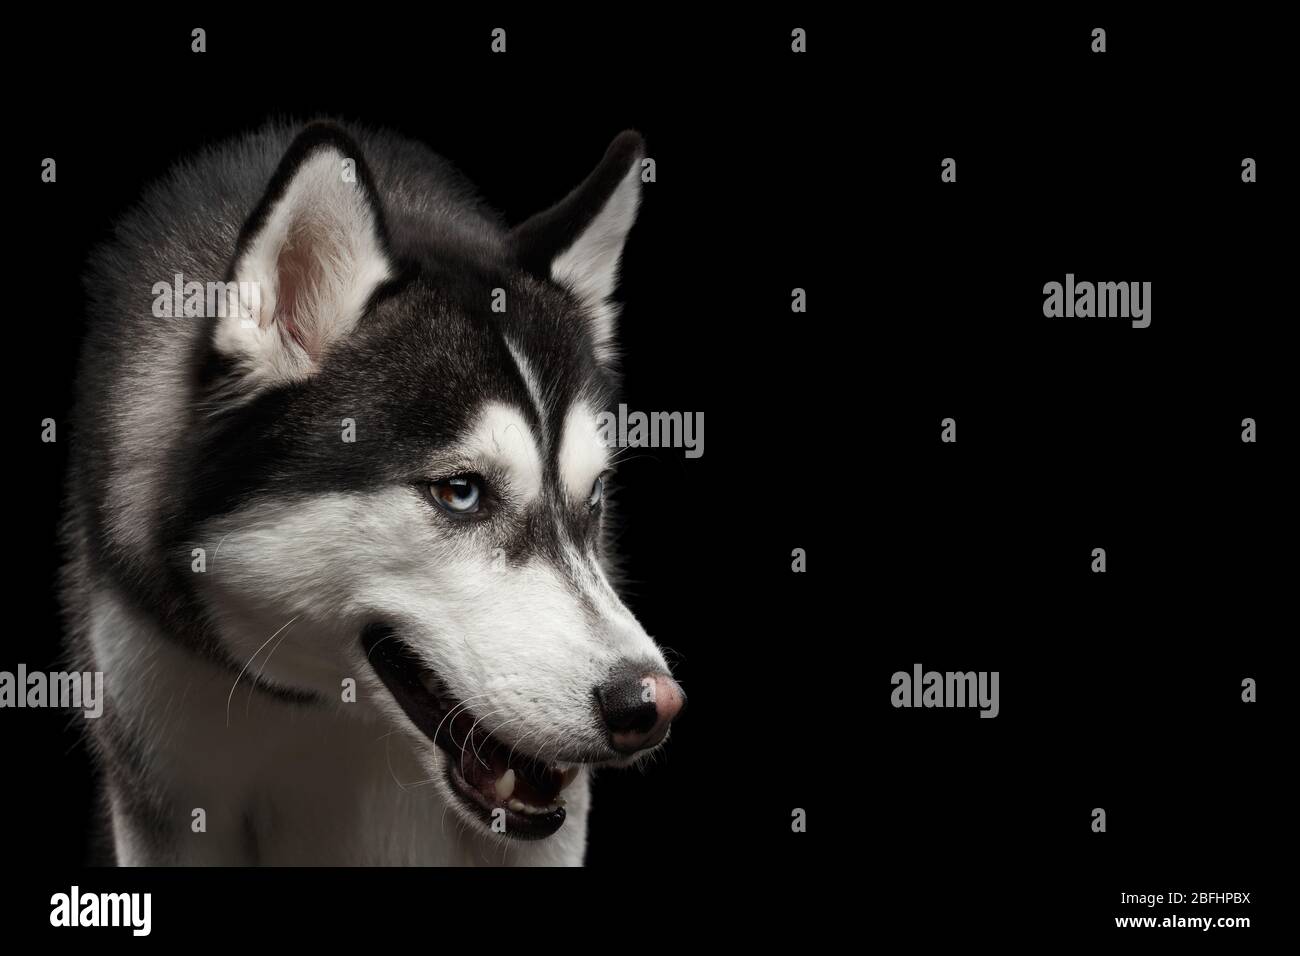 Closeup Portrait of Angry Dog Siberian Husky on Isolated Black Background Stock Photo